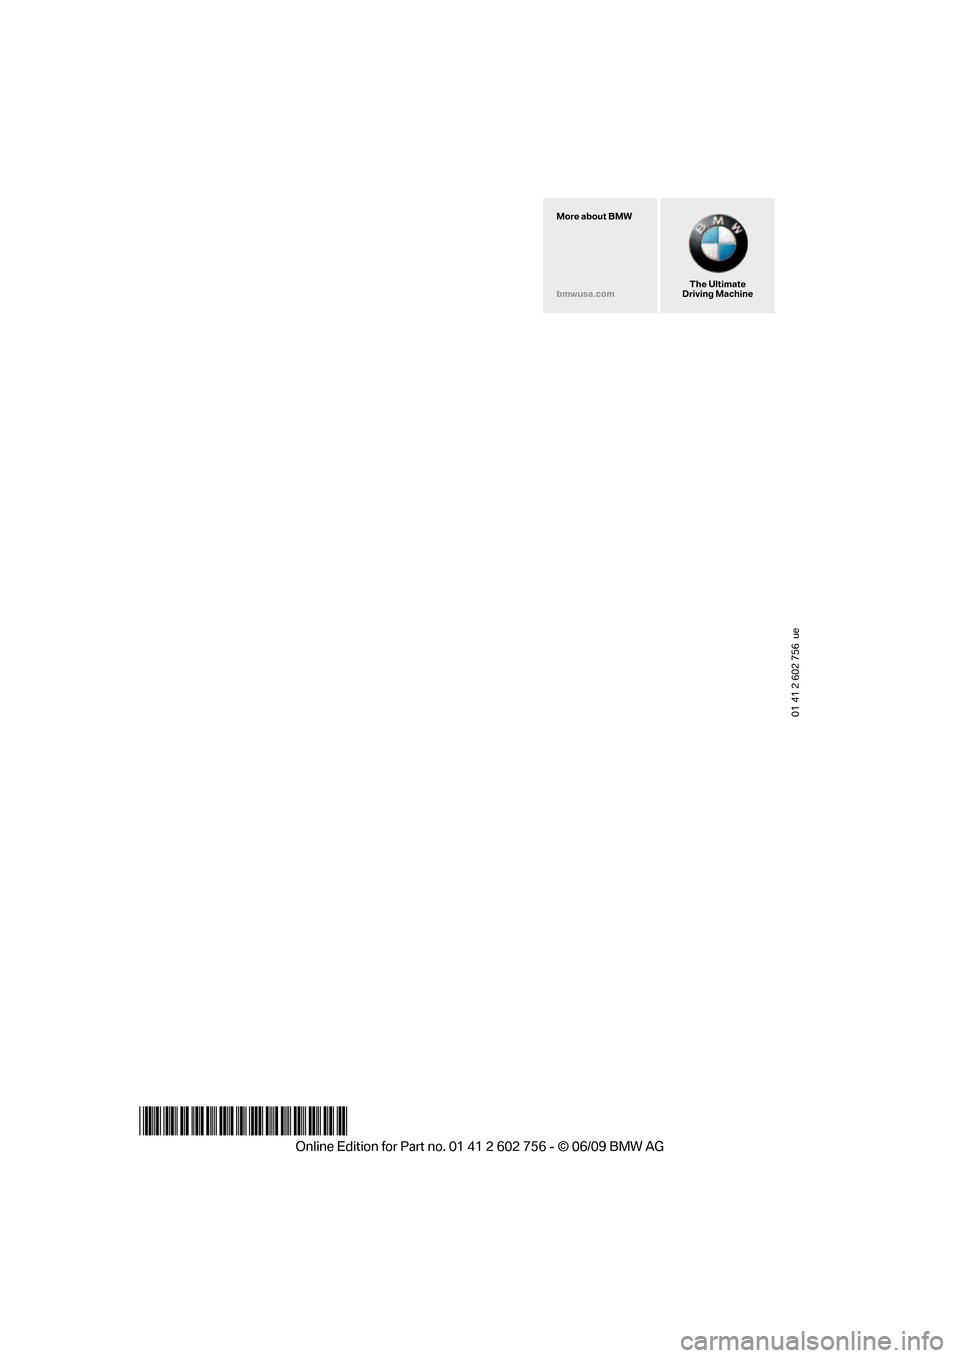 BMW X5 XDRIVE 48I 2010 E70 Owners Manual 01 41 2 602 756  ue
*BL2602756004*
The Ultimate
Driving Machine More about BMW
bmwusa.com
ba8_e70ag.book  Seite 298  Freitag, 5. Juni 2009  11:42 11 